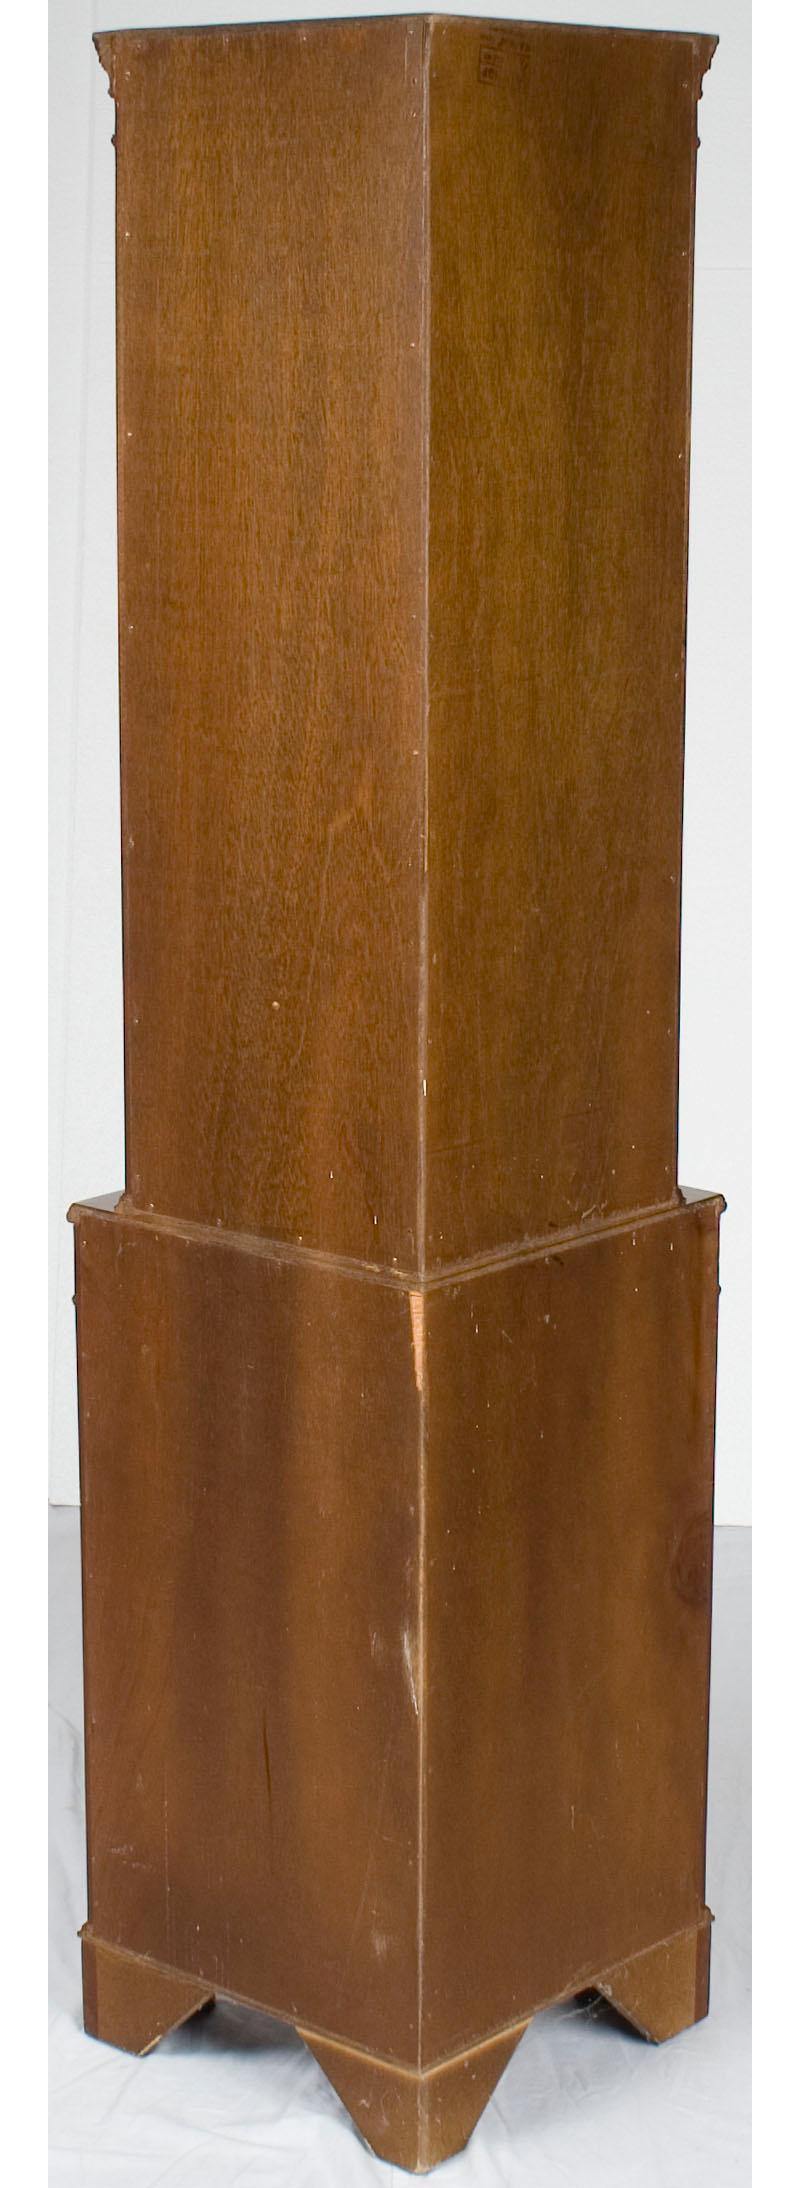 Mid-20th Century Tall Narrow Mahogany Corner Cabinet Cupboard Hutch For Sale